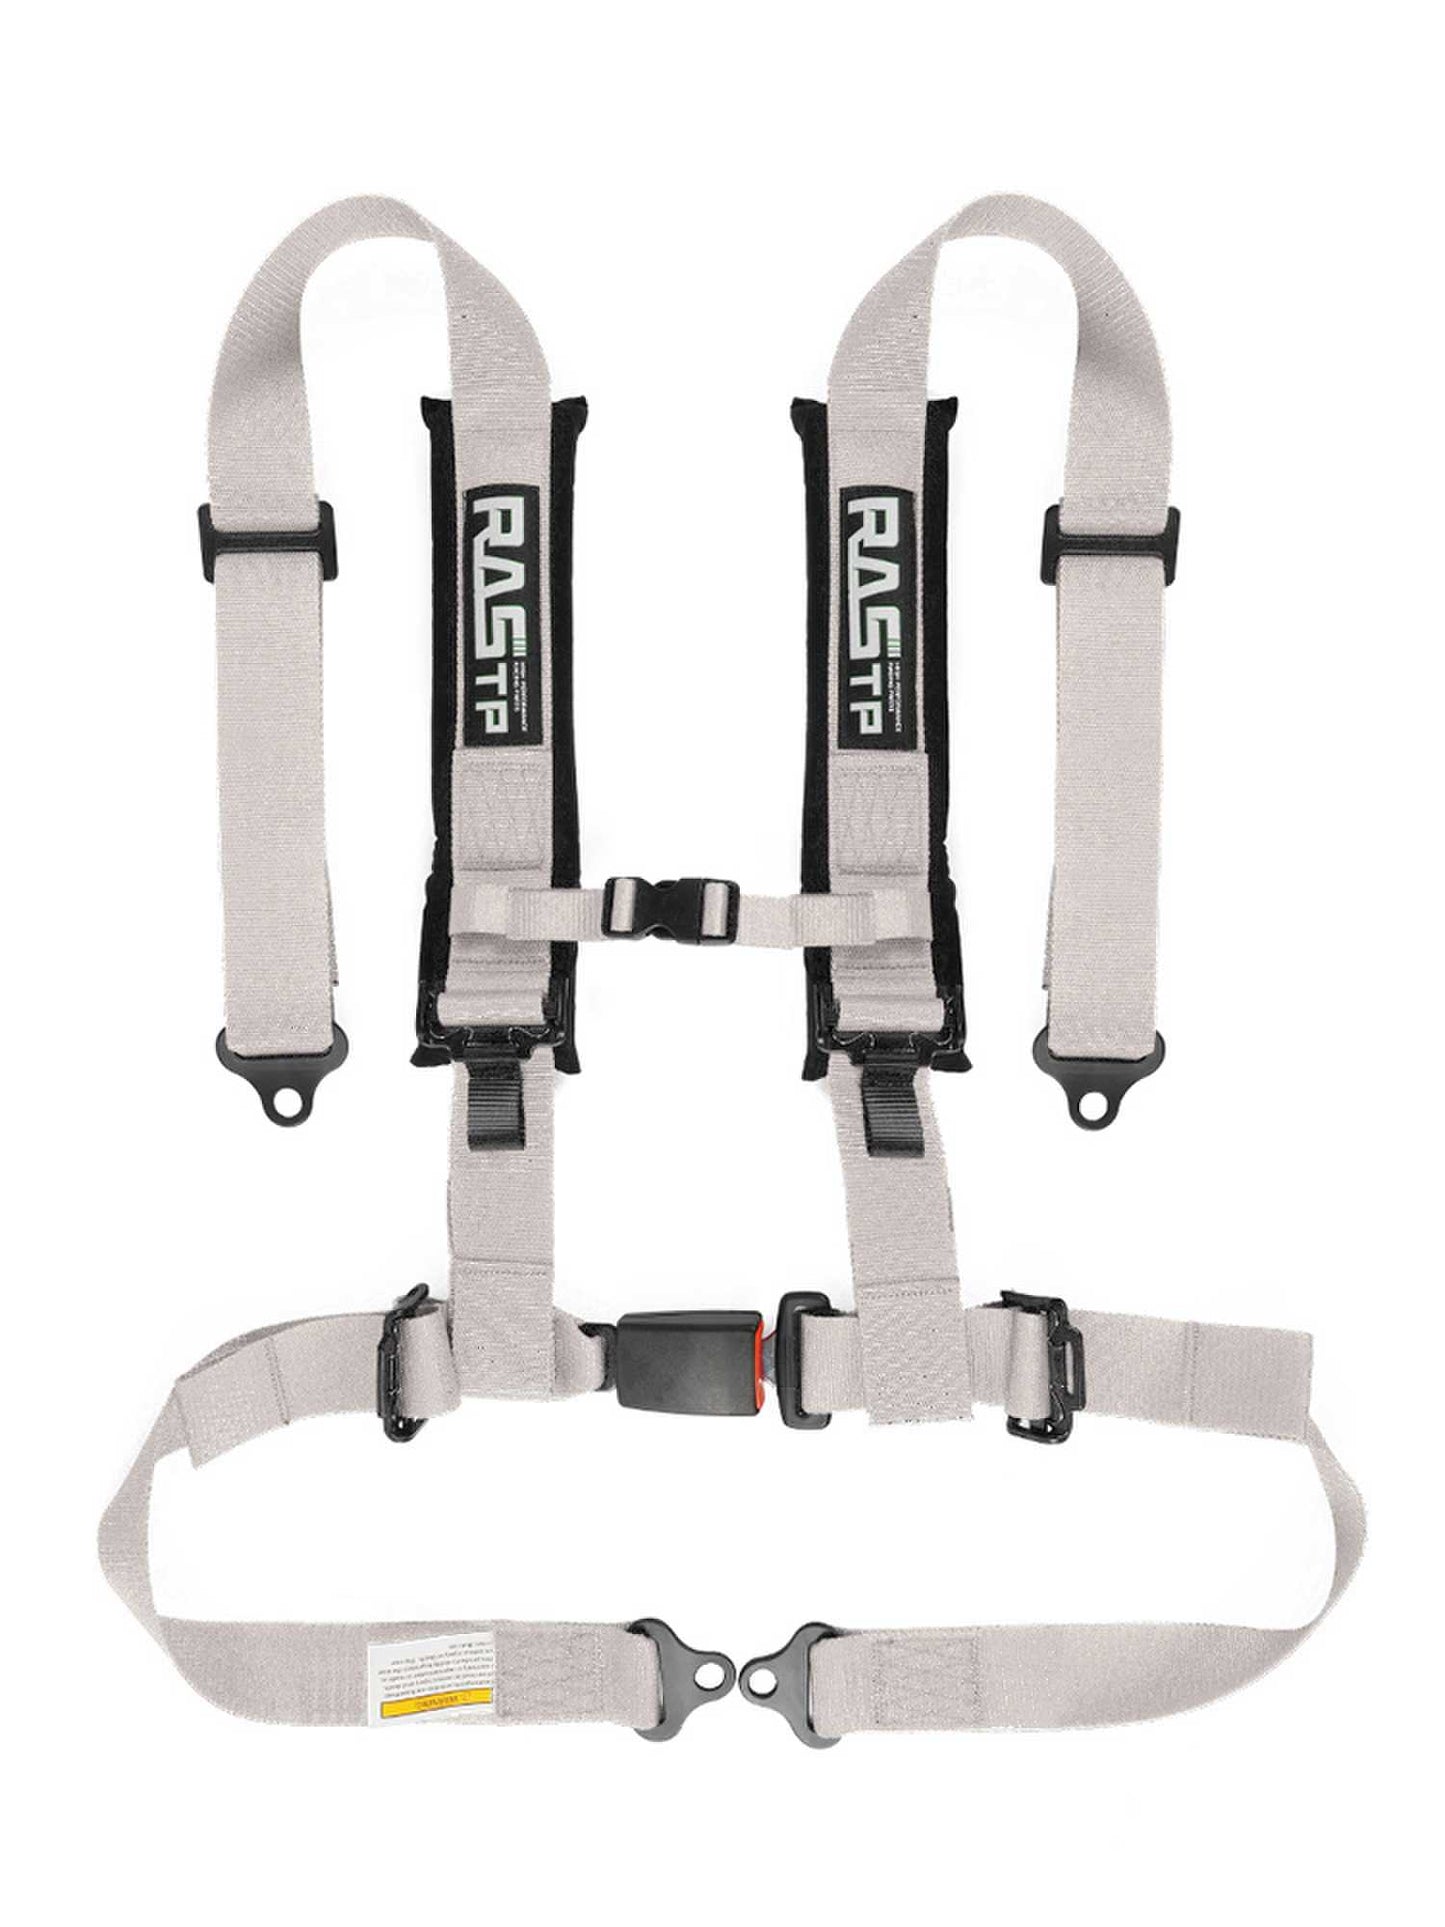 RASTP 4 Point Seat Belt Harness with 2 Inch Sponge Padding